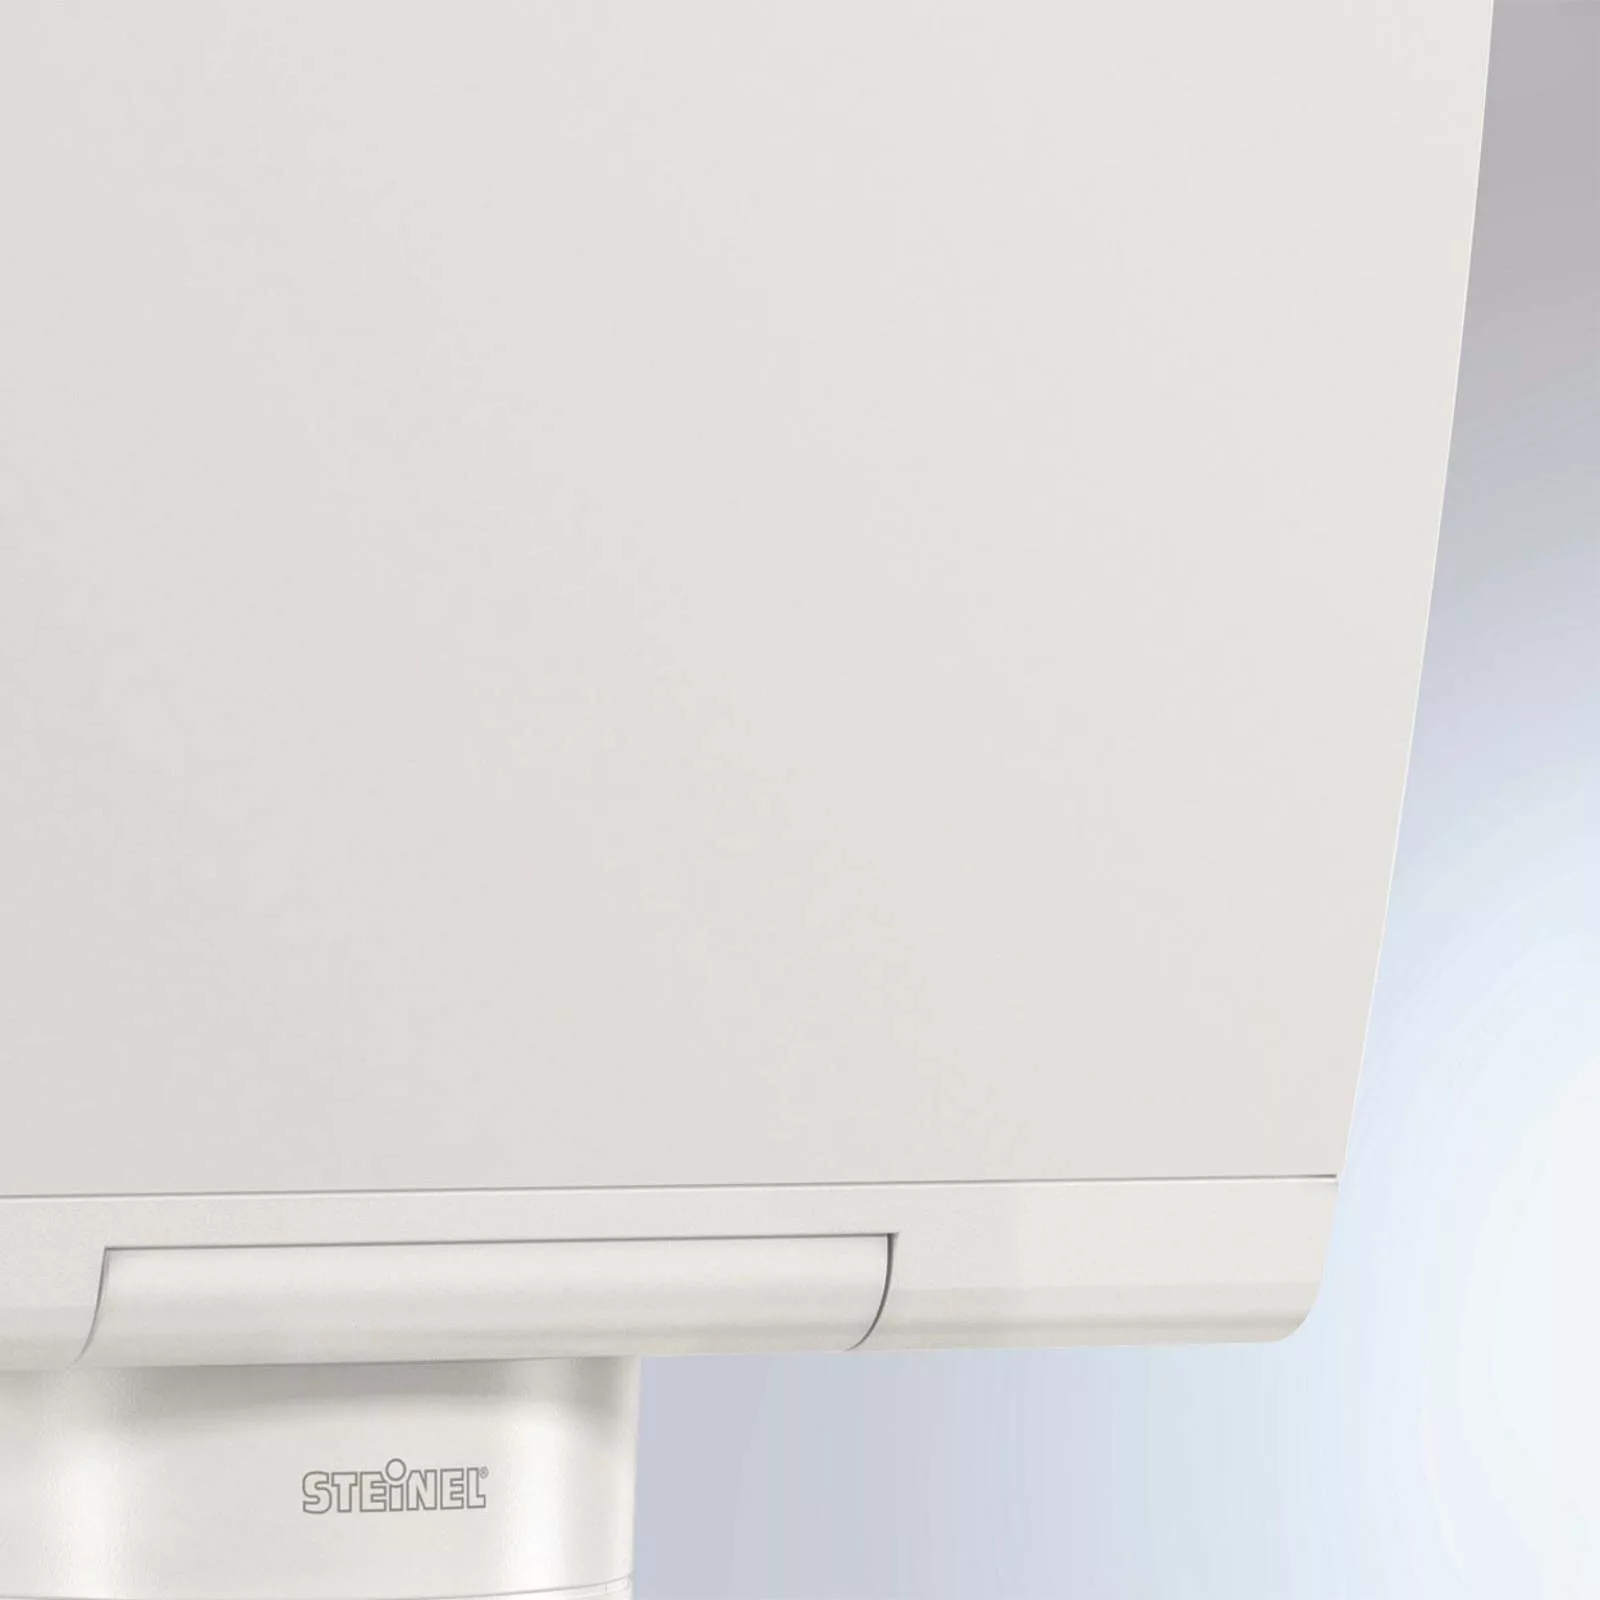 Steinel LED-Strahler XLED PRO 240 WS V2 günstig online kaufen